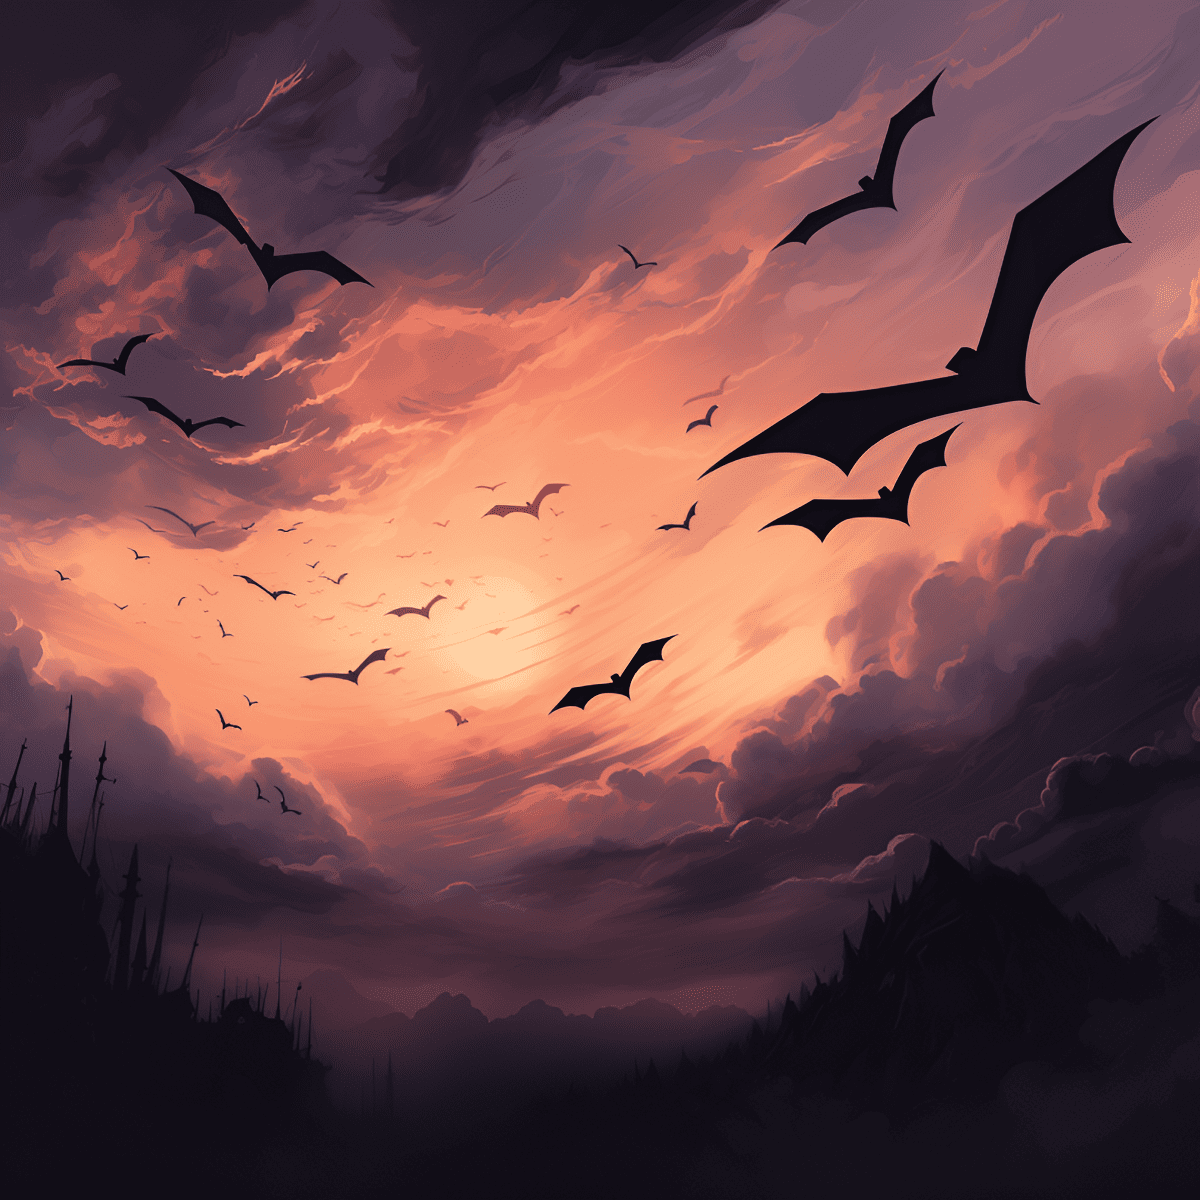 bats flying in the night sky